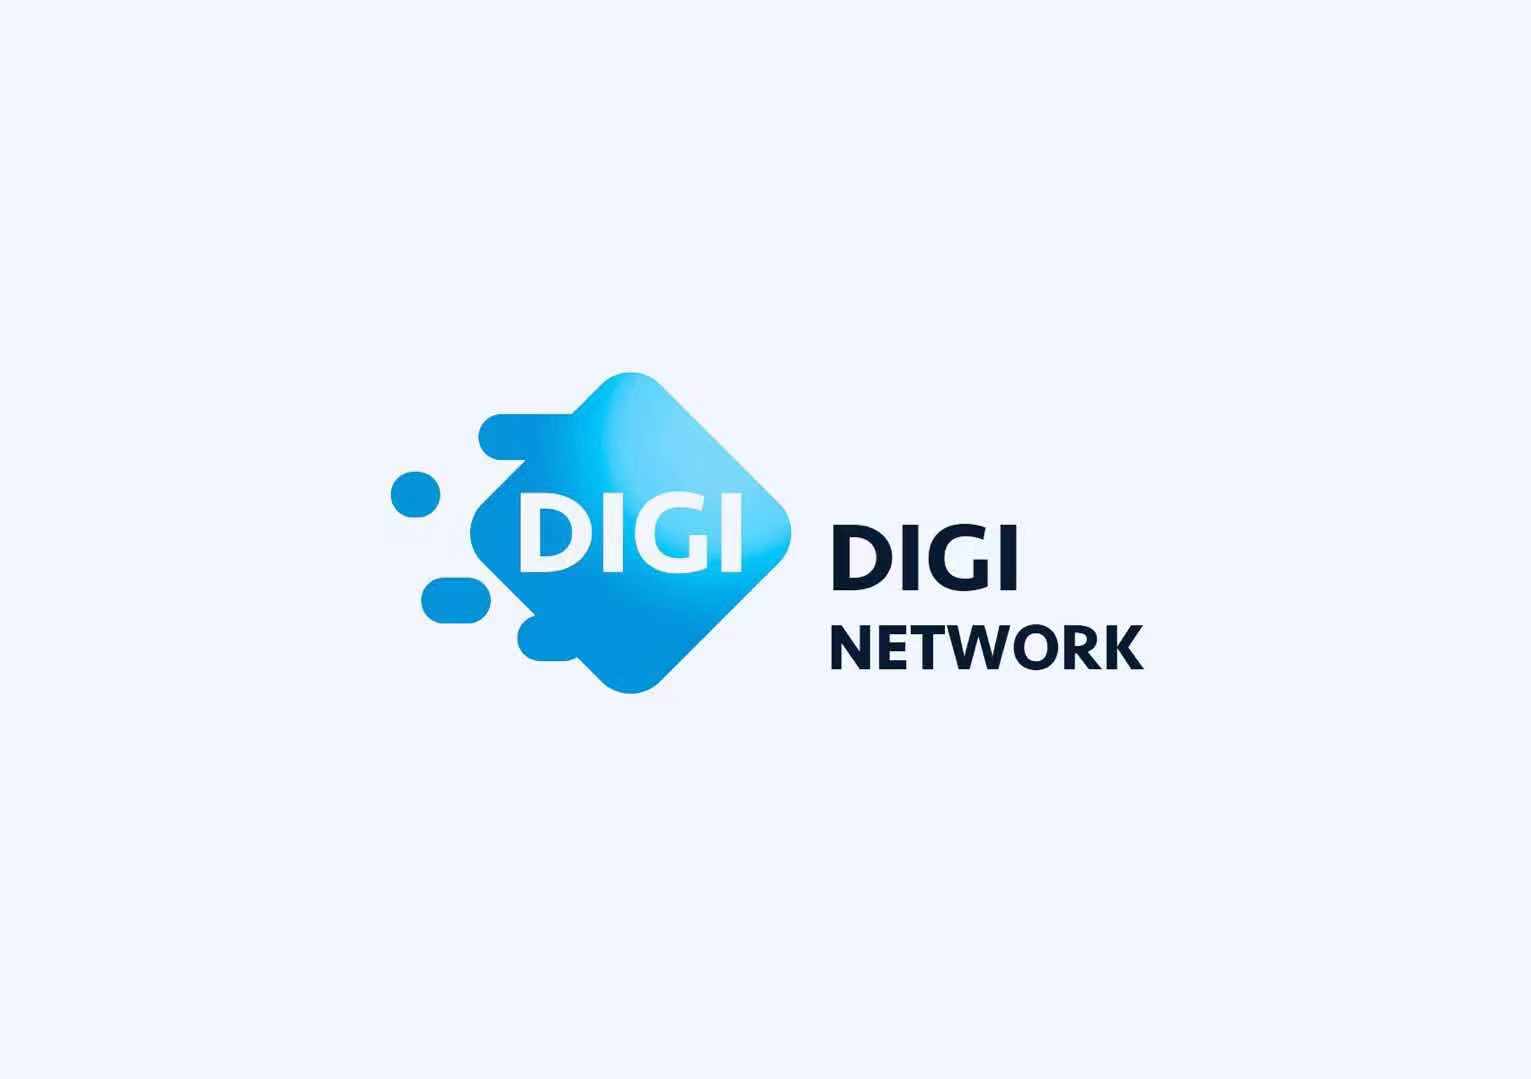 Digi Network of Myanmar